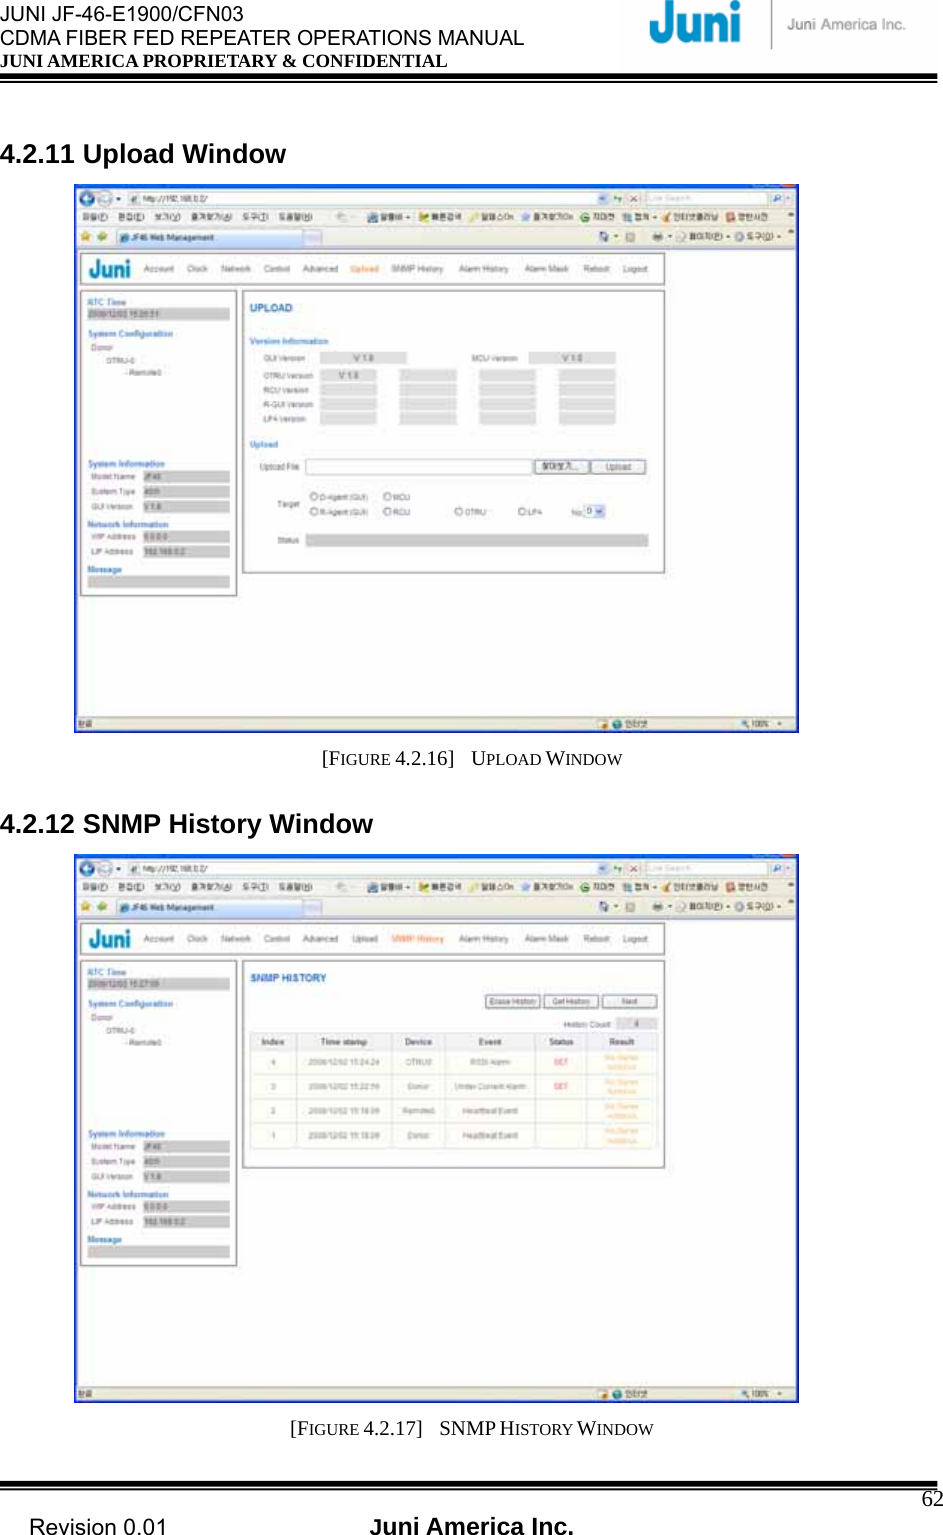  JUNI JF-46-E1900/CFN03 CDMA FIBER FED REPEATER OPERATIONS MANUAL JUNI AMERICA PROPRIETARY &amp; CONFIDENTIAL                                   Revision 0.01  Juni America Inc.  62 4.2.11 Upload Window  [FIGURE 4.2.16]  UPLOAD WINDOW  4.2.12 SNMP History Window  [FIGURE 4.2.17]  SNMP HISTORY WINDOW 